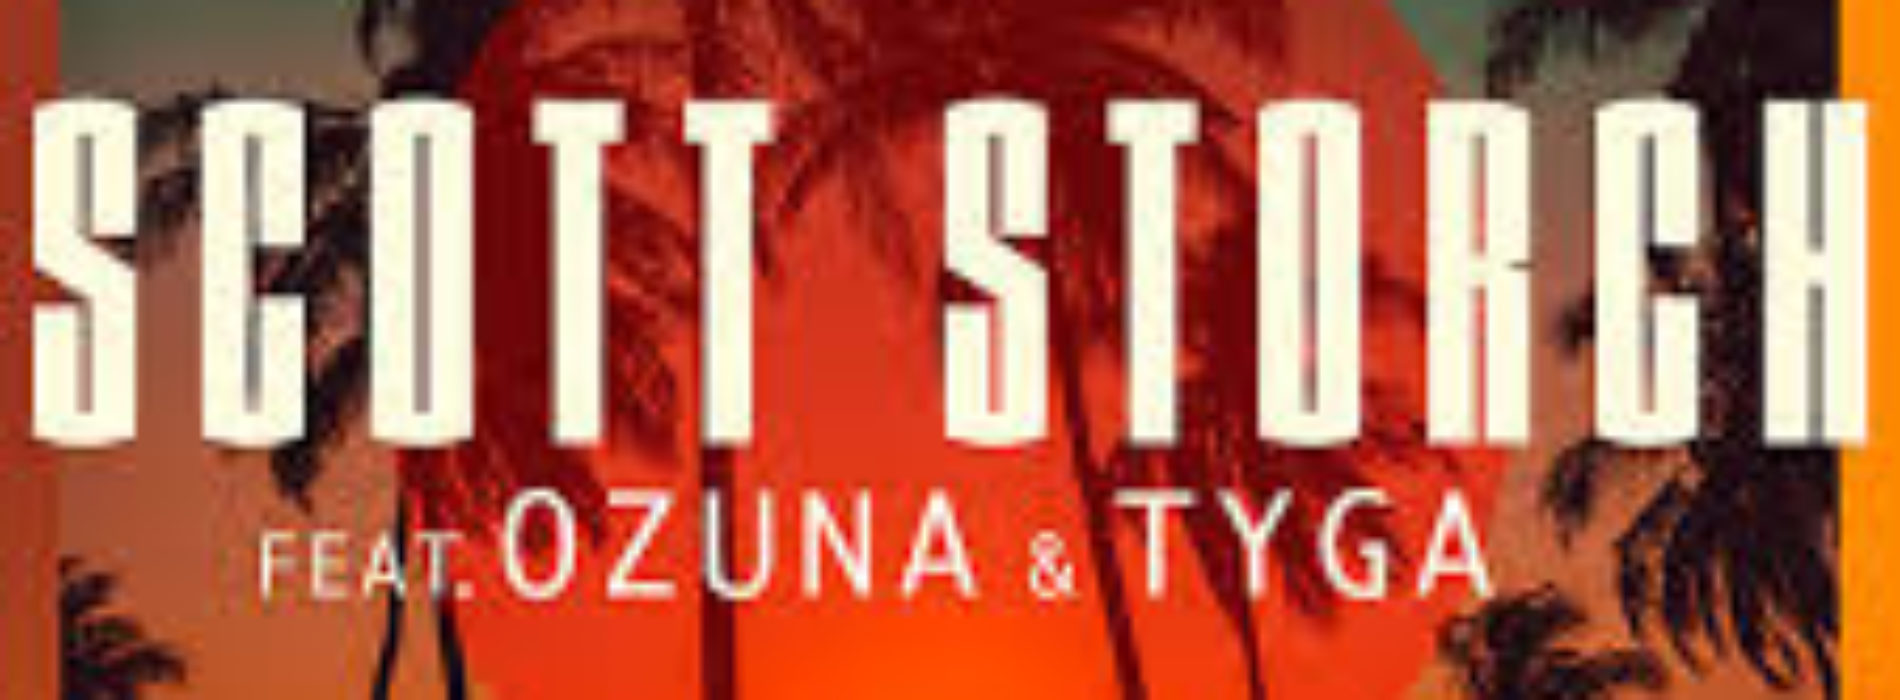 Scott Storch – Fuego Del Calor (feat. Ozuna & Tyga) [Audio] – Juin 2020